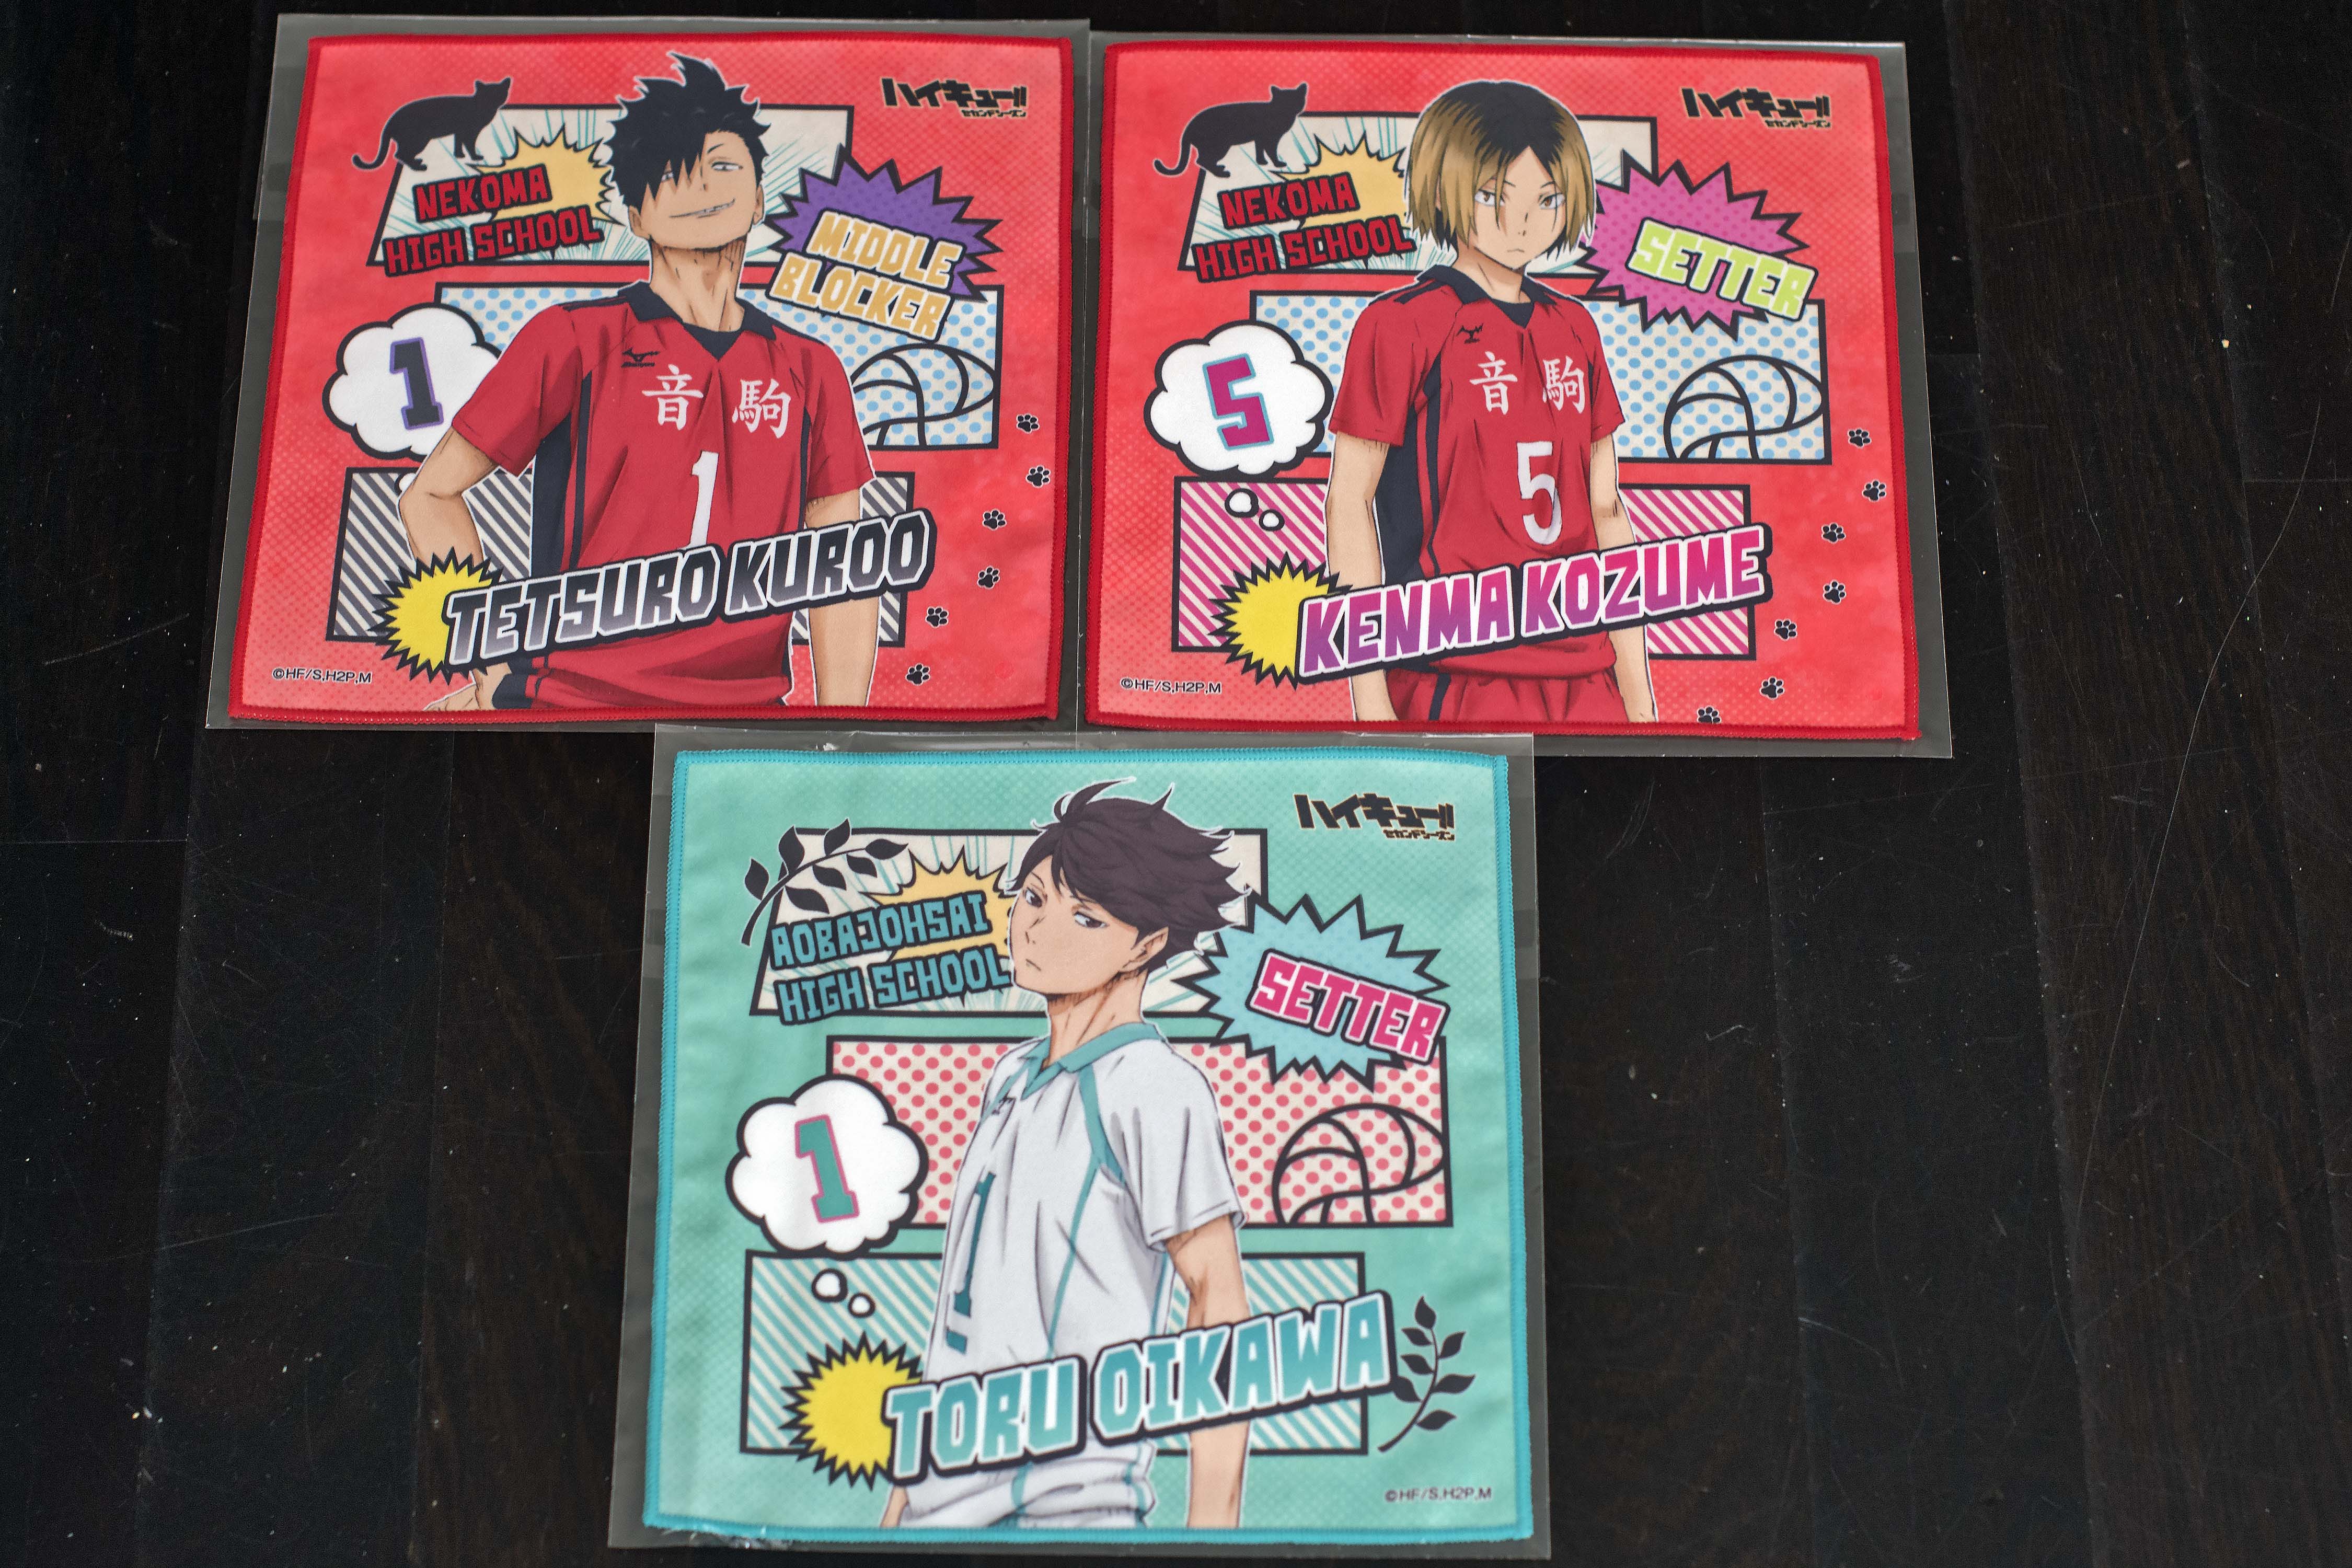 Unboxing: merchandise ufficiale dall'anime Haikyuu!!